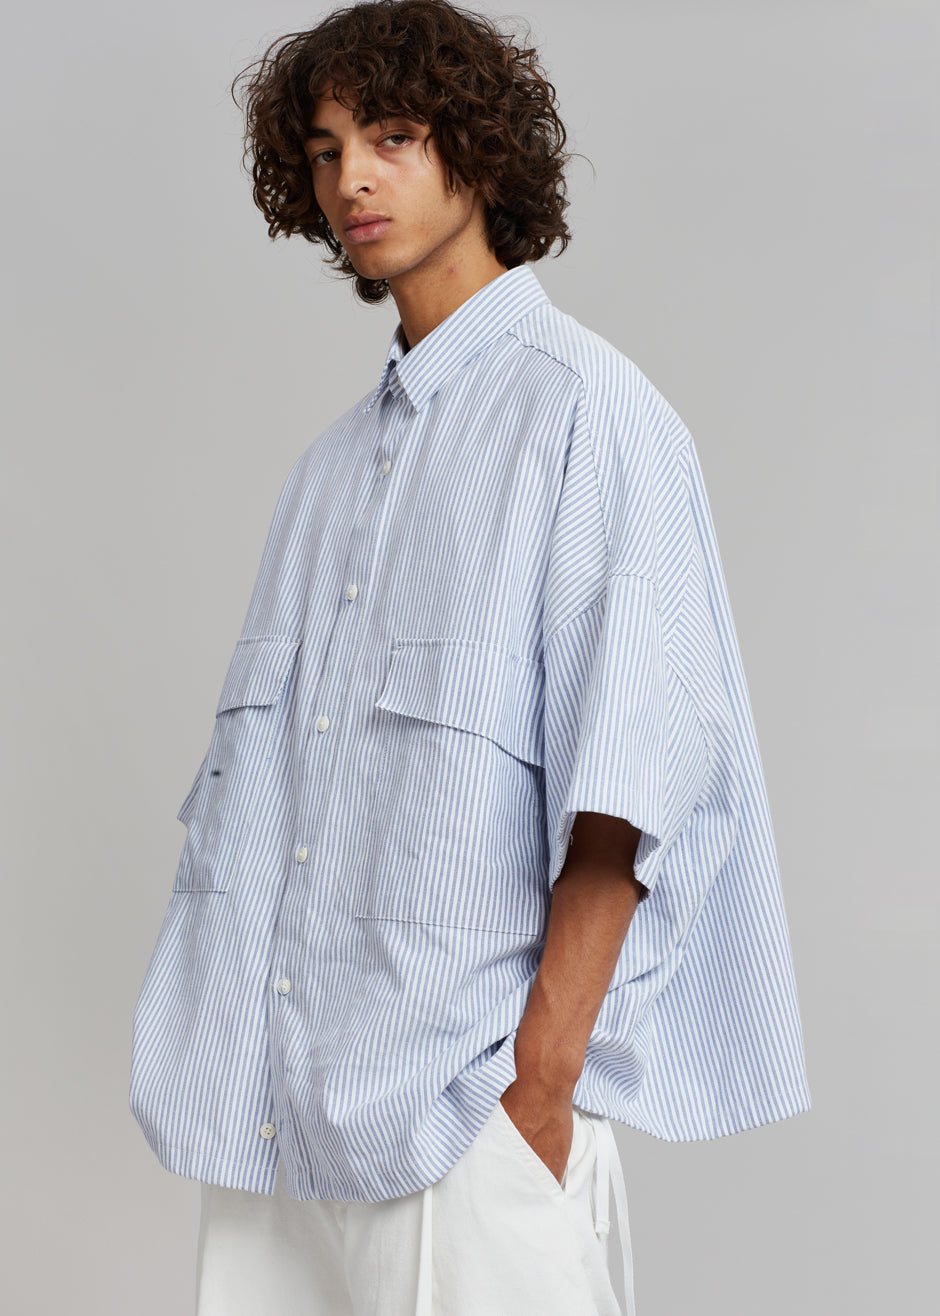 Ethan Pocket Shirt - Blue Stripe - 3